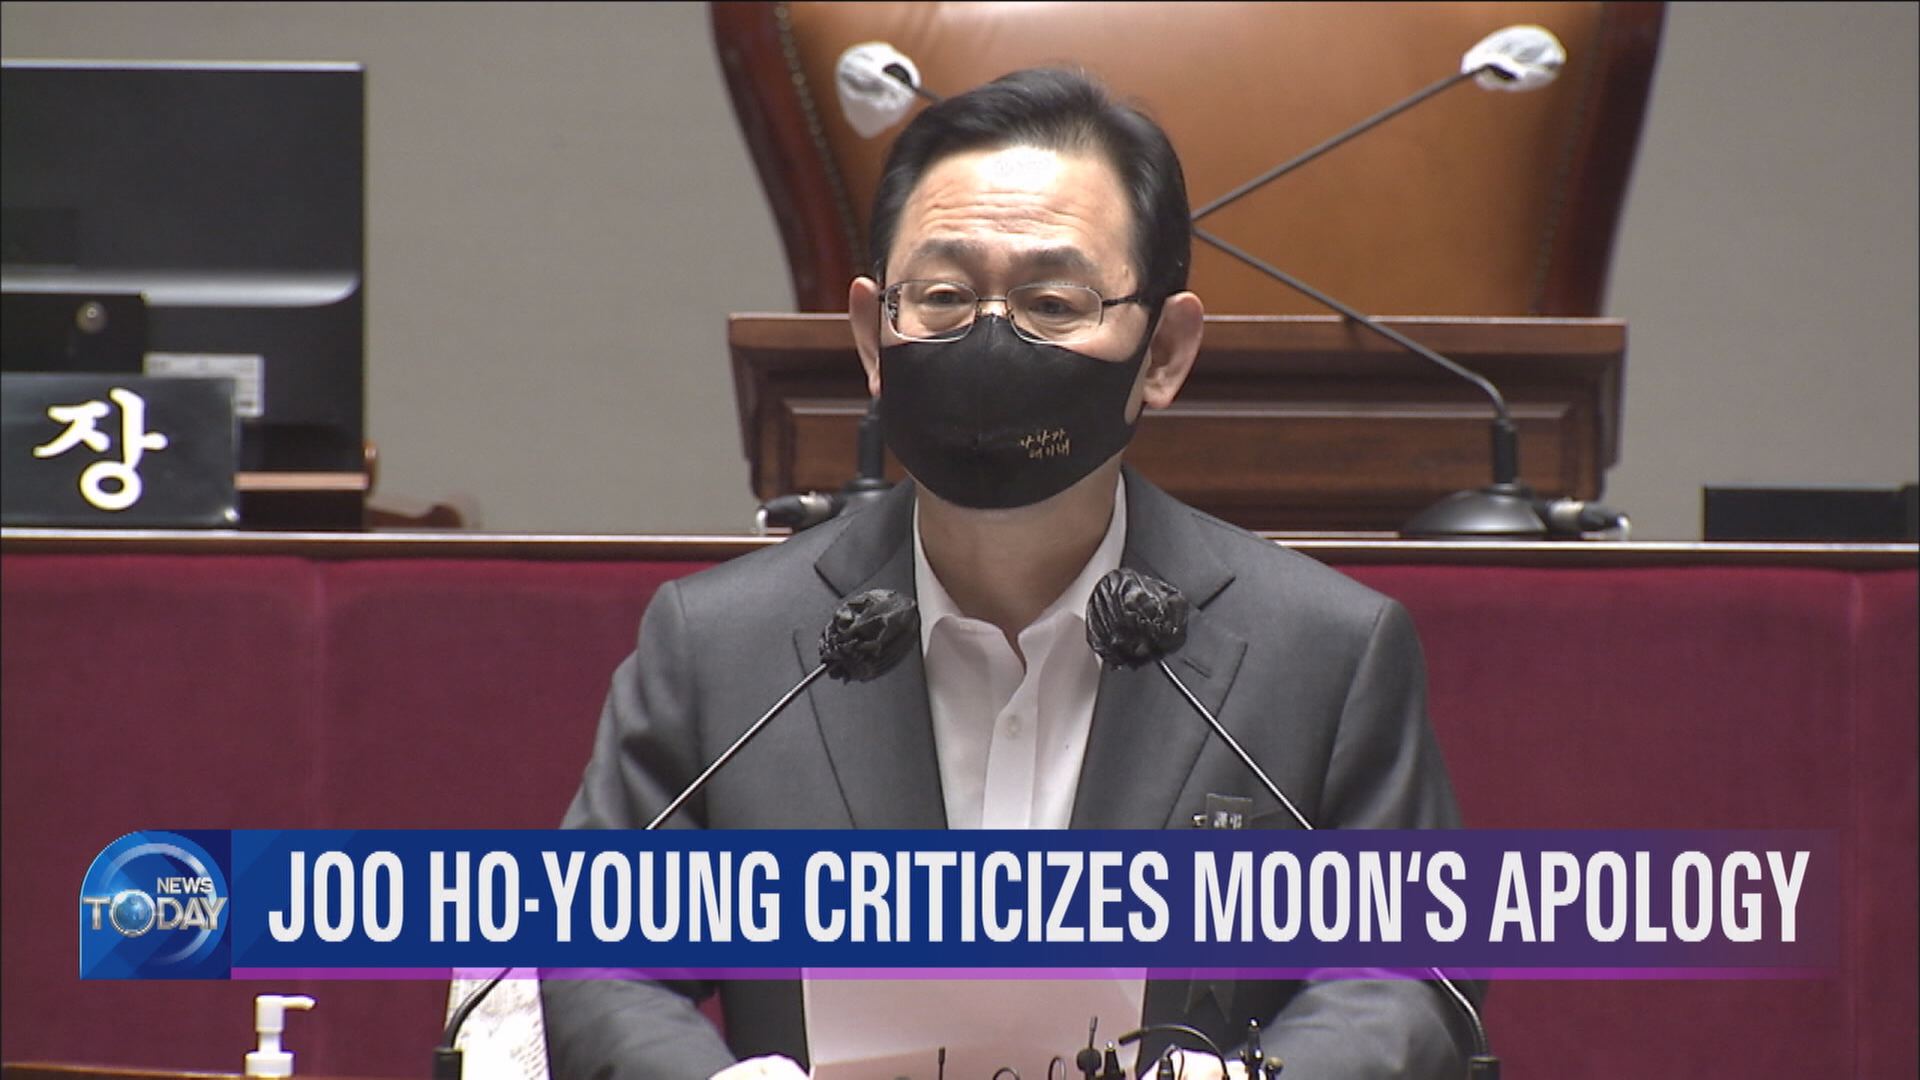 JOO HO-YOUNG CRITICIZES MOON’S APOLOGY